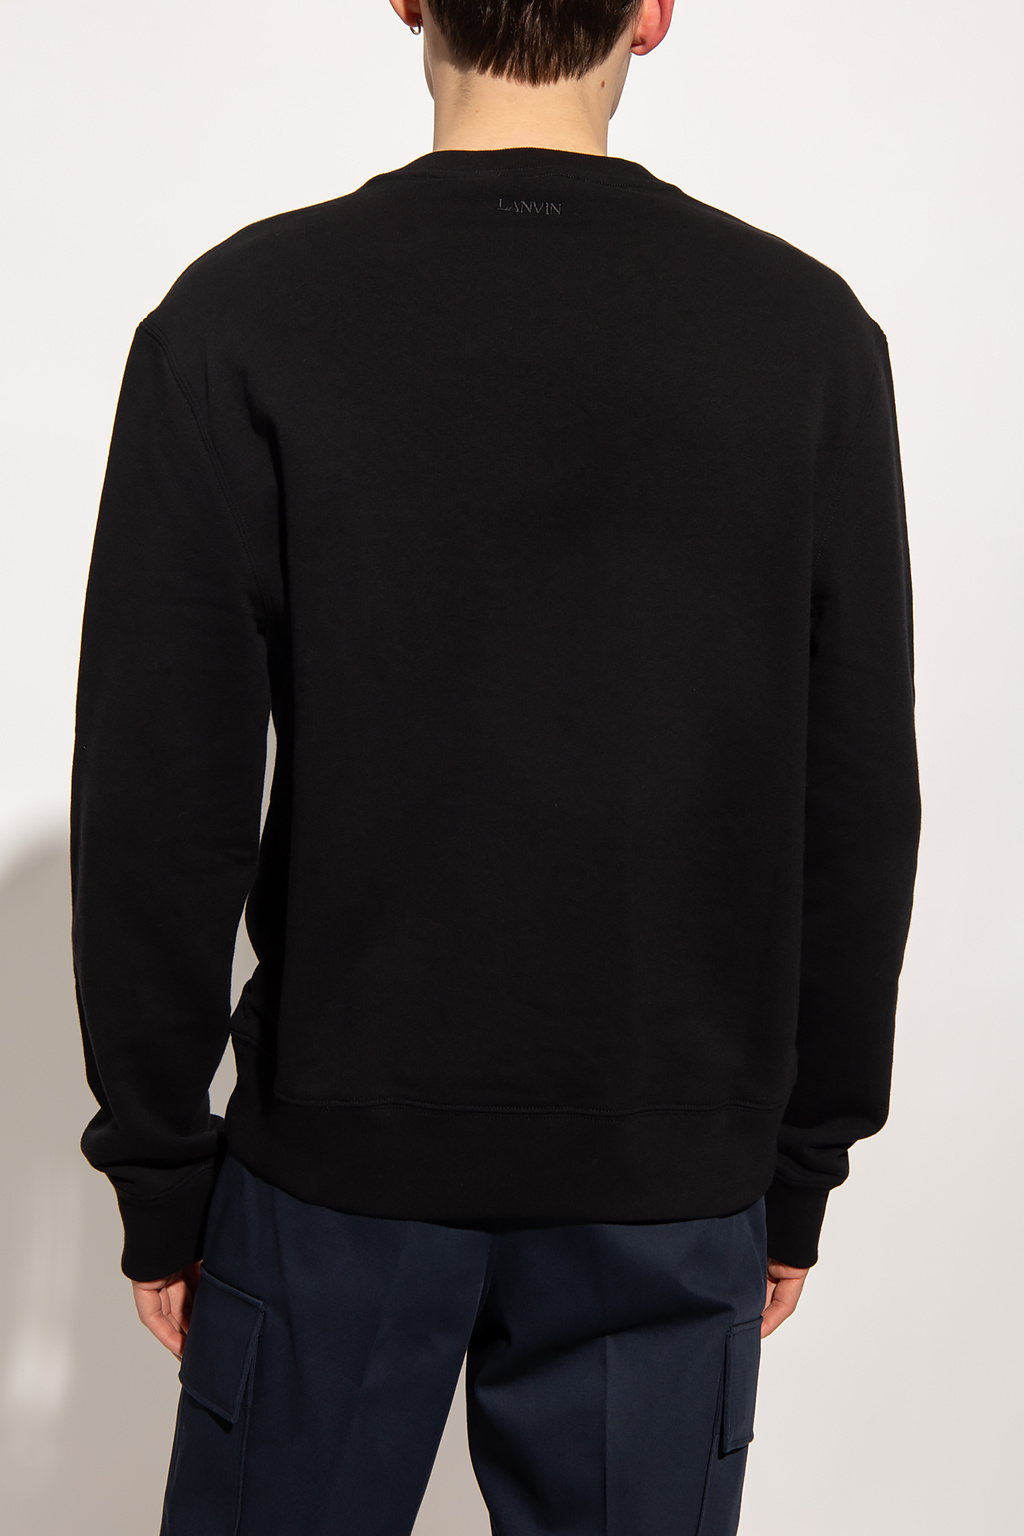 Lanvin backpack-print cotton tog sweatshirt